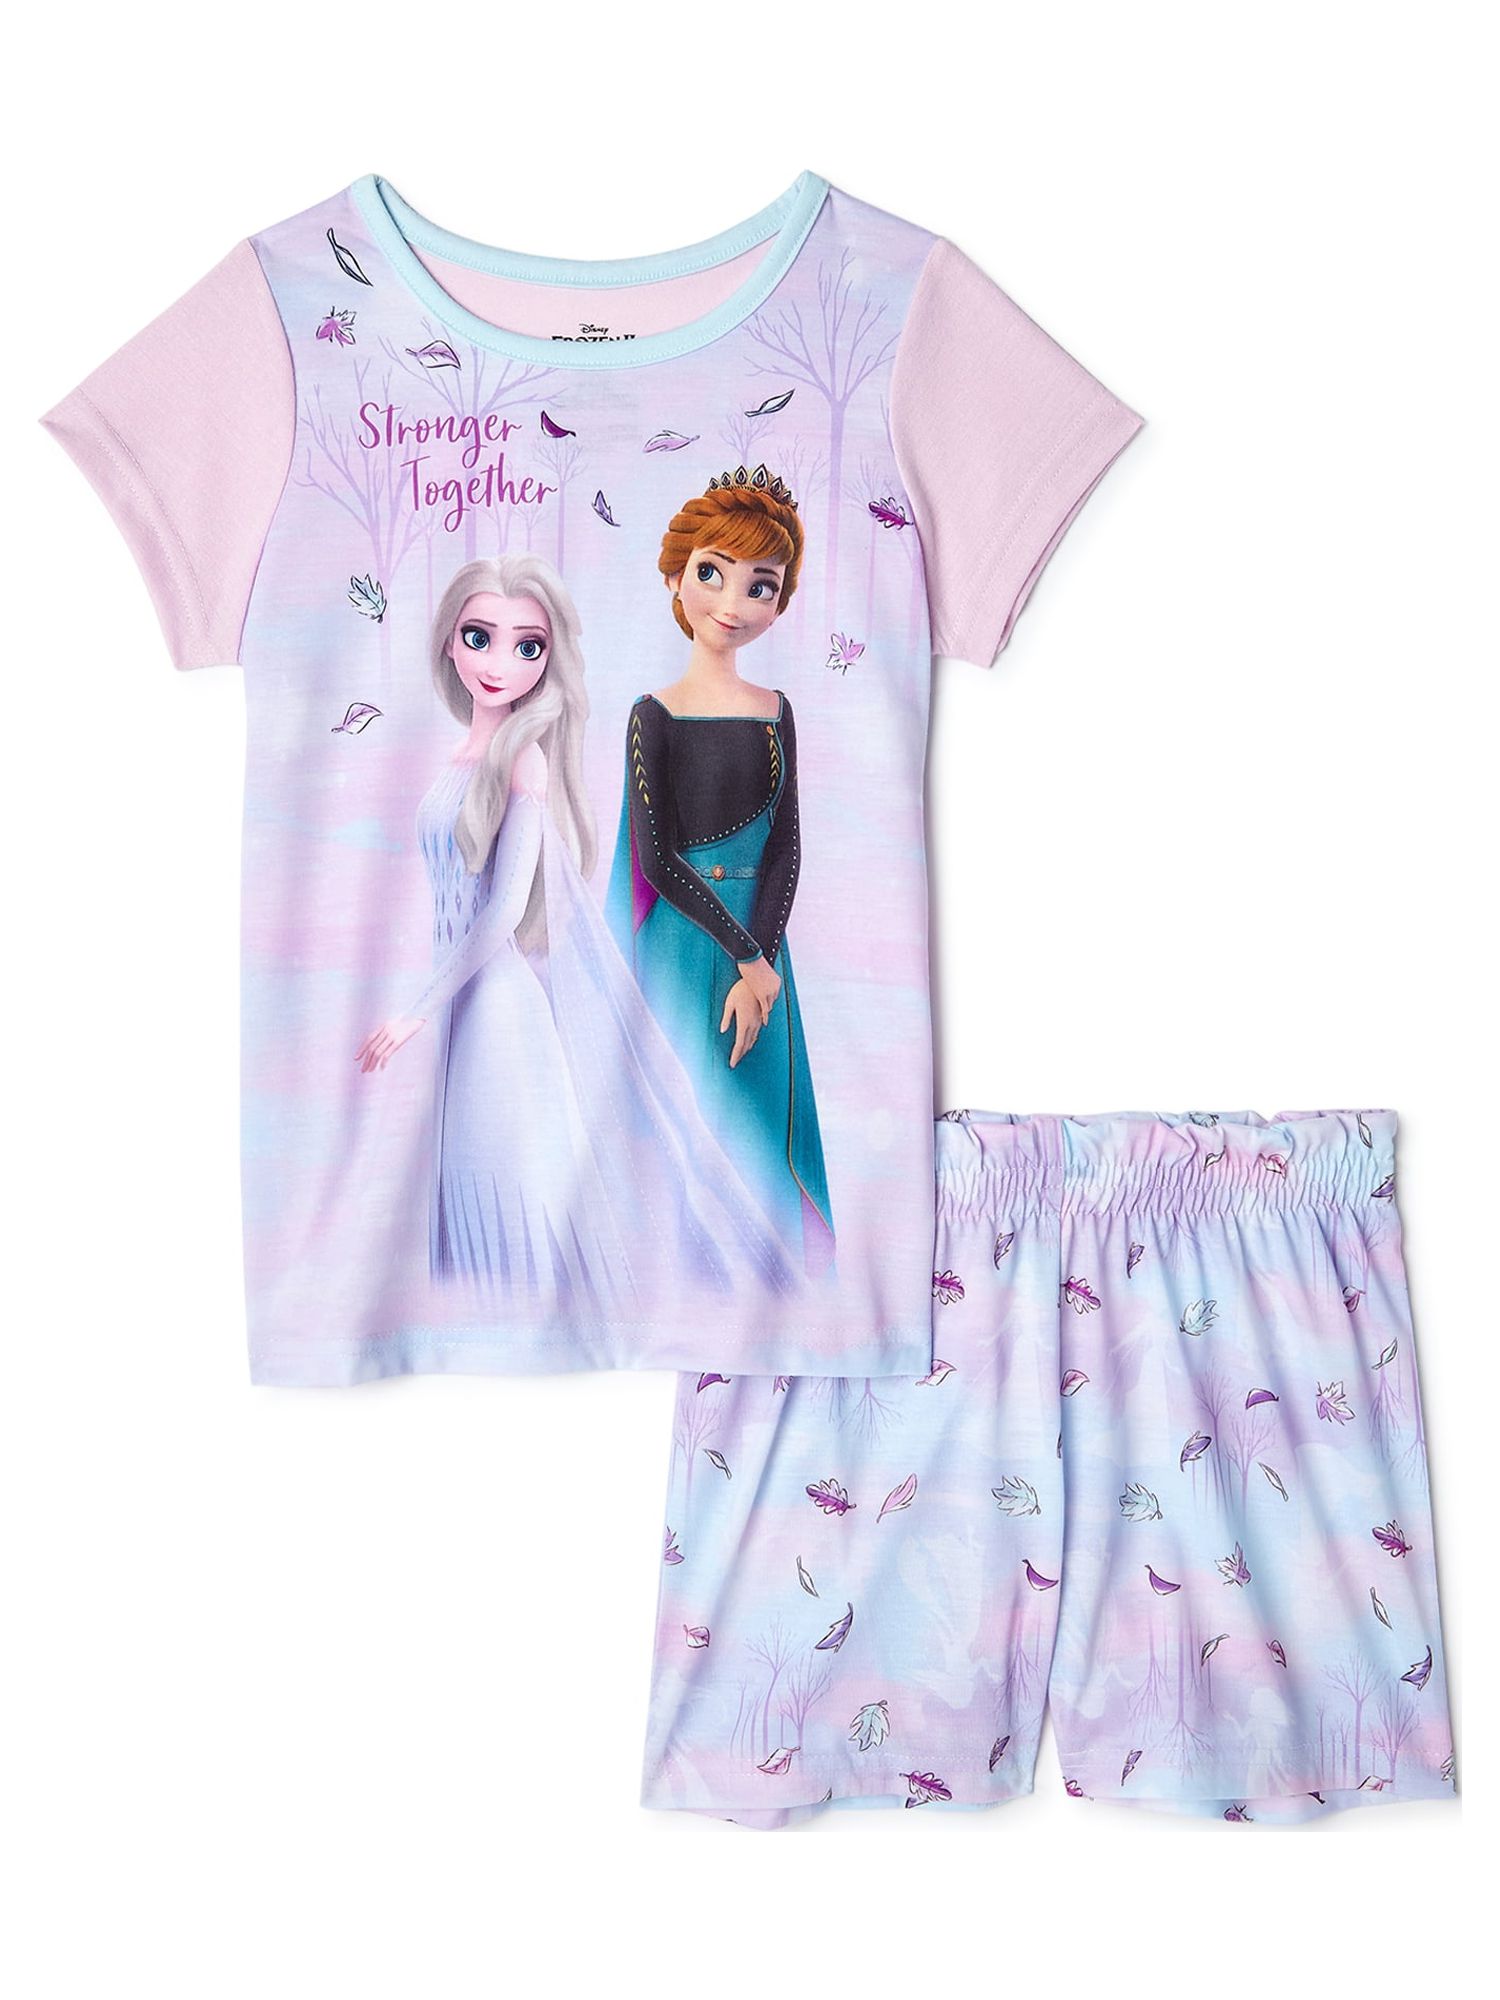 Disney Frozen 2 Anna and Elsa Girls Short Sleeve Top & Shorts Pajamas, 2-Pc Set, Sizes 4-12 - image 1 of 3